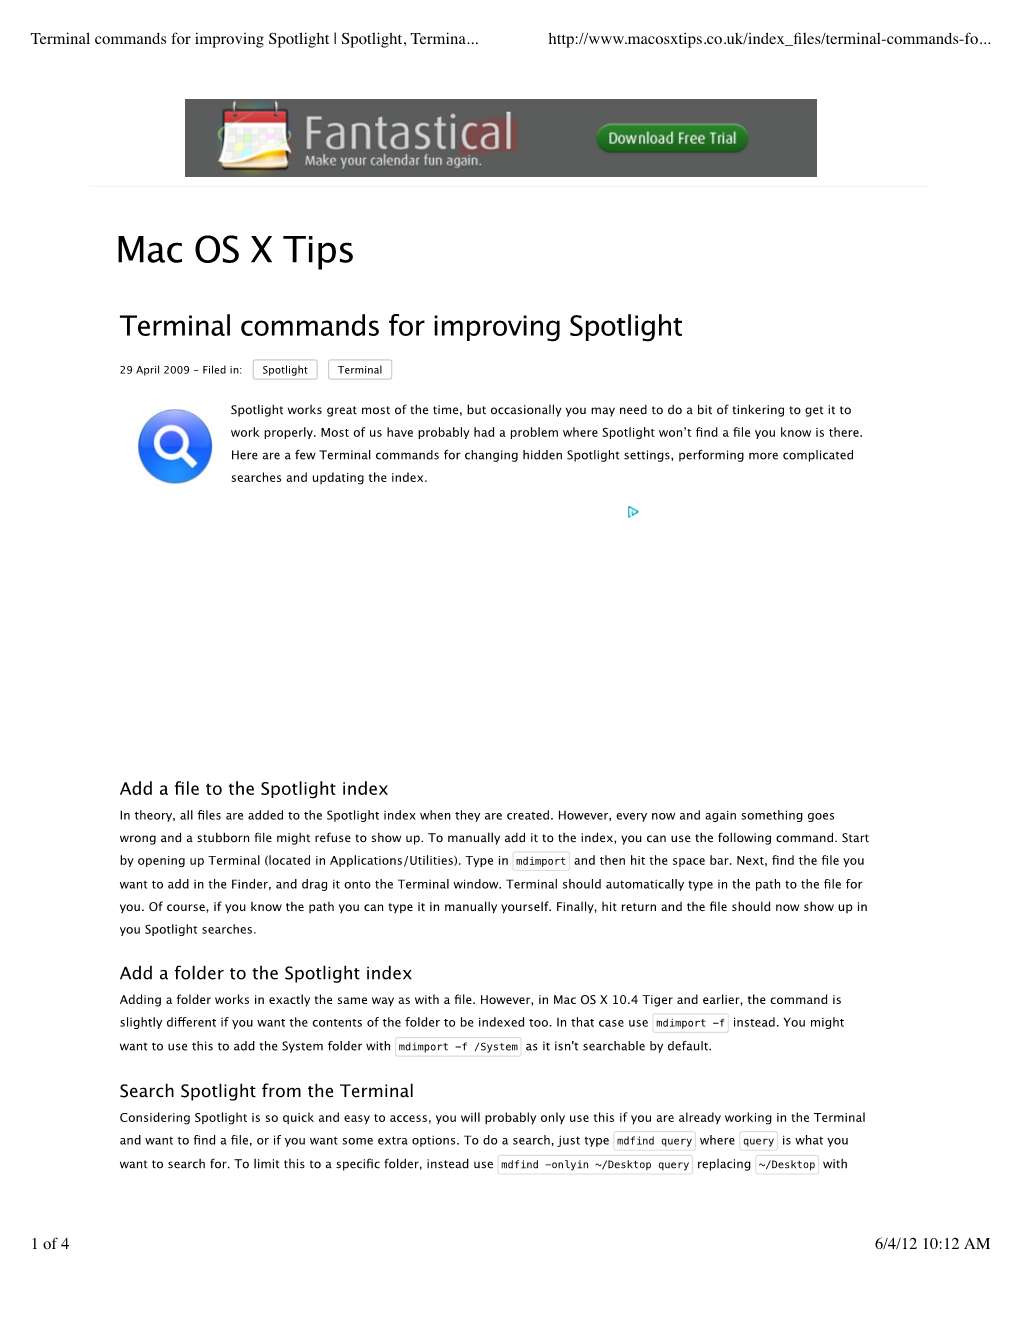 Terminal Commands for Improving Spotlight | Spotlight, Terminal | Mac OS X Tips